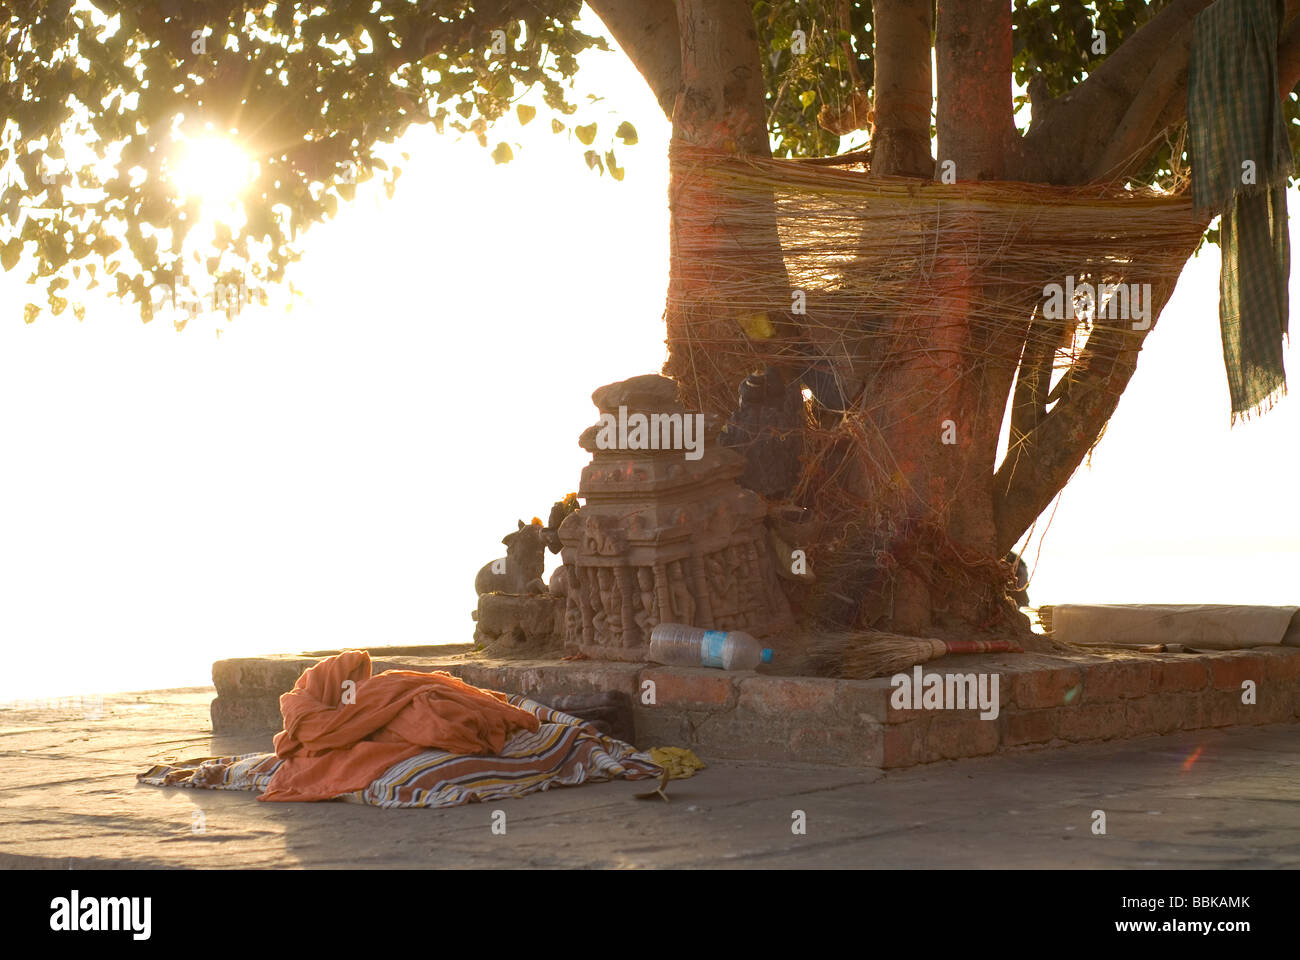 Hindu holy place on Ganges river bank. Assi Ghat, Varanasi, India. Stock Photo